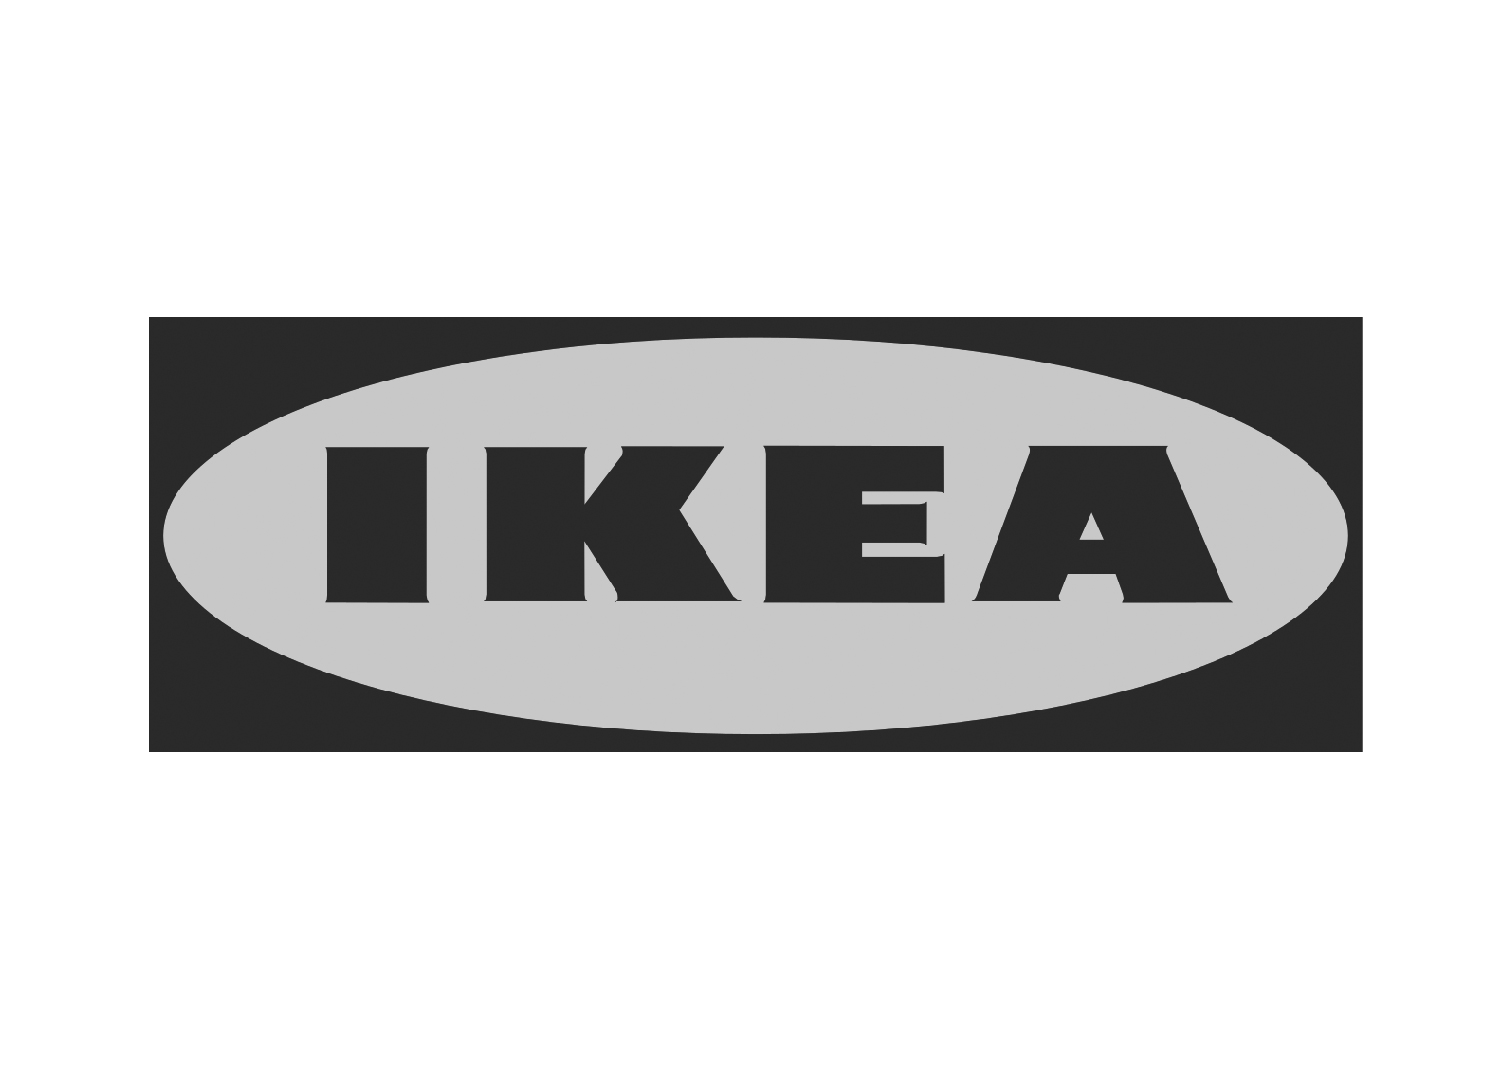 Ikea-01.jpg